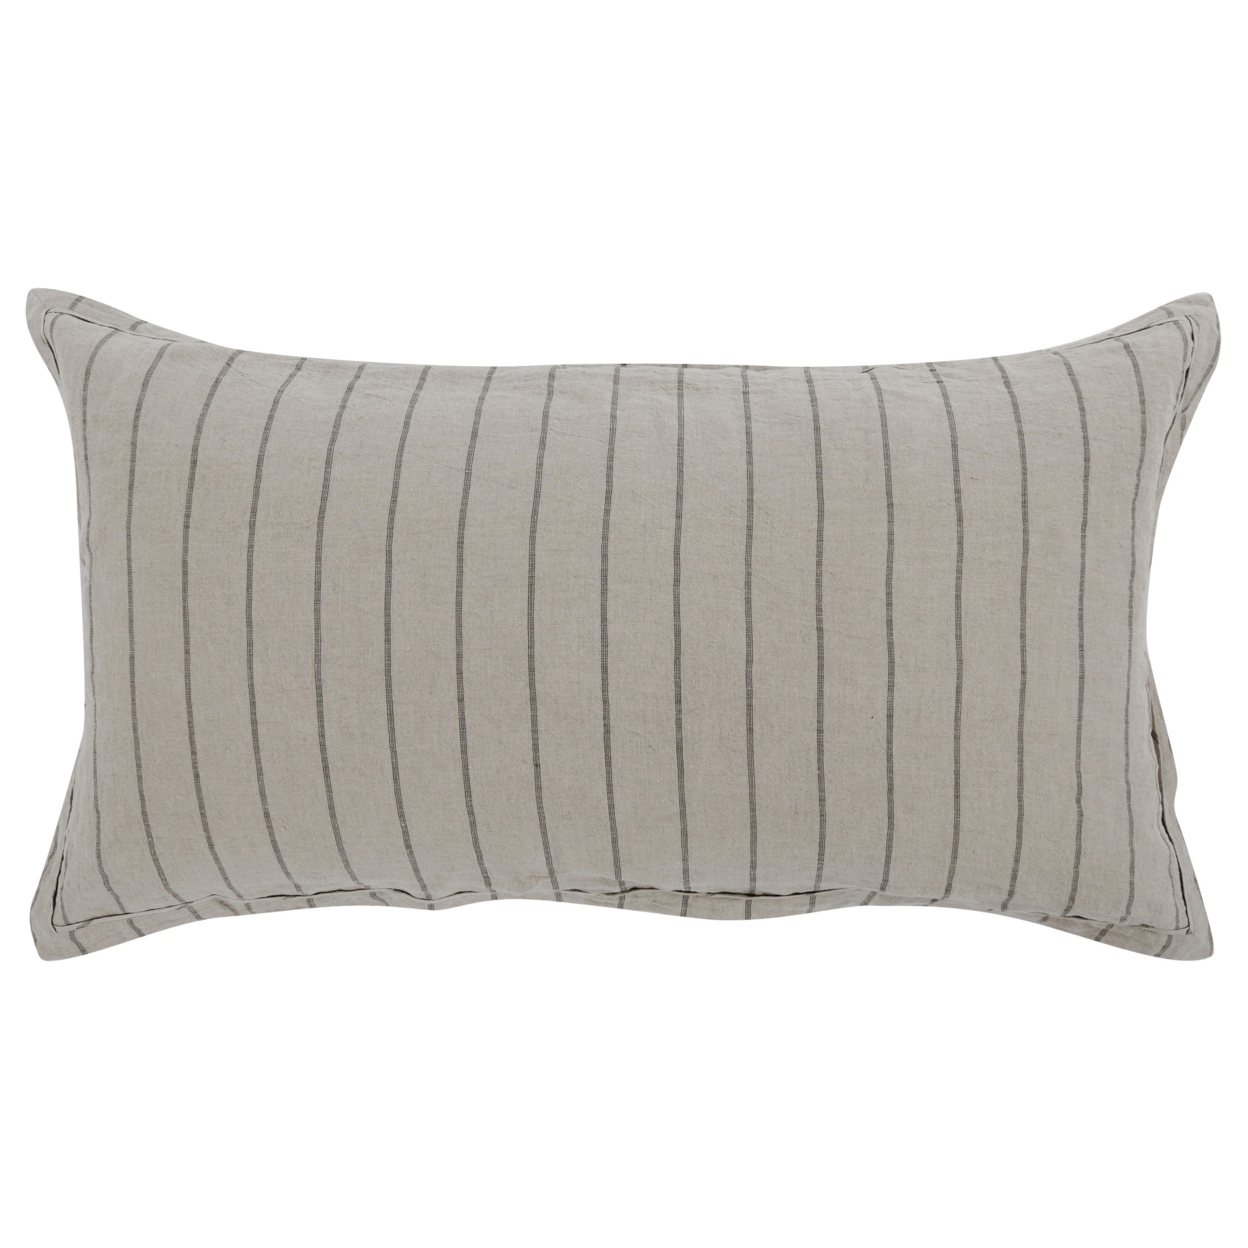 Tara King Size Lumbar Pillow Sham, Cotton Sateen Back, Woven Stripe, Beige- Saltoro Sherpi